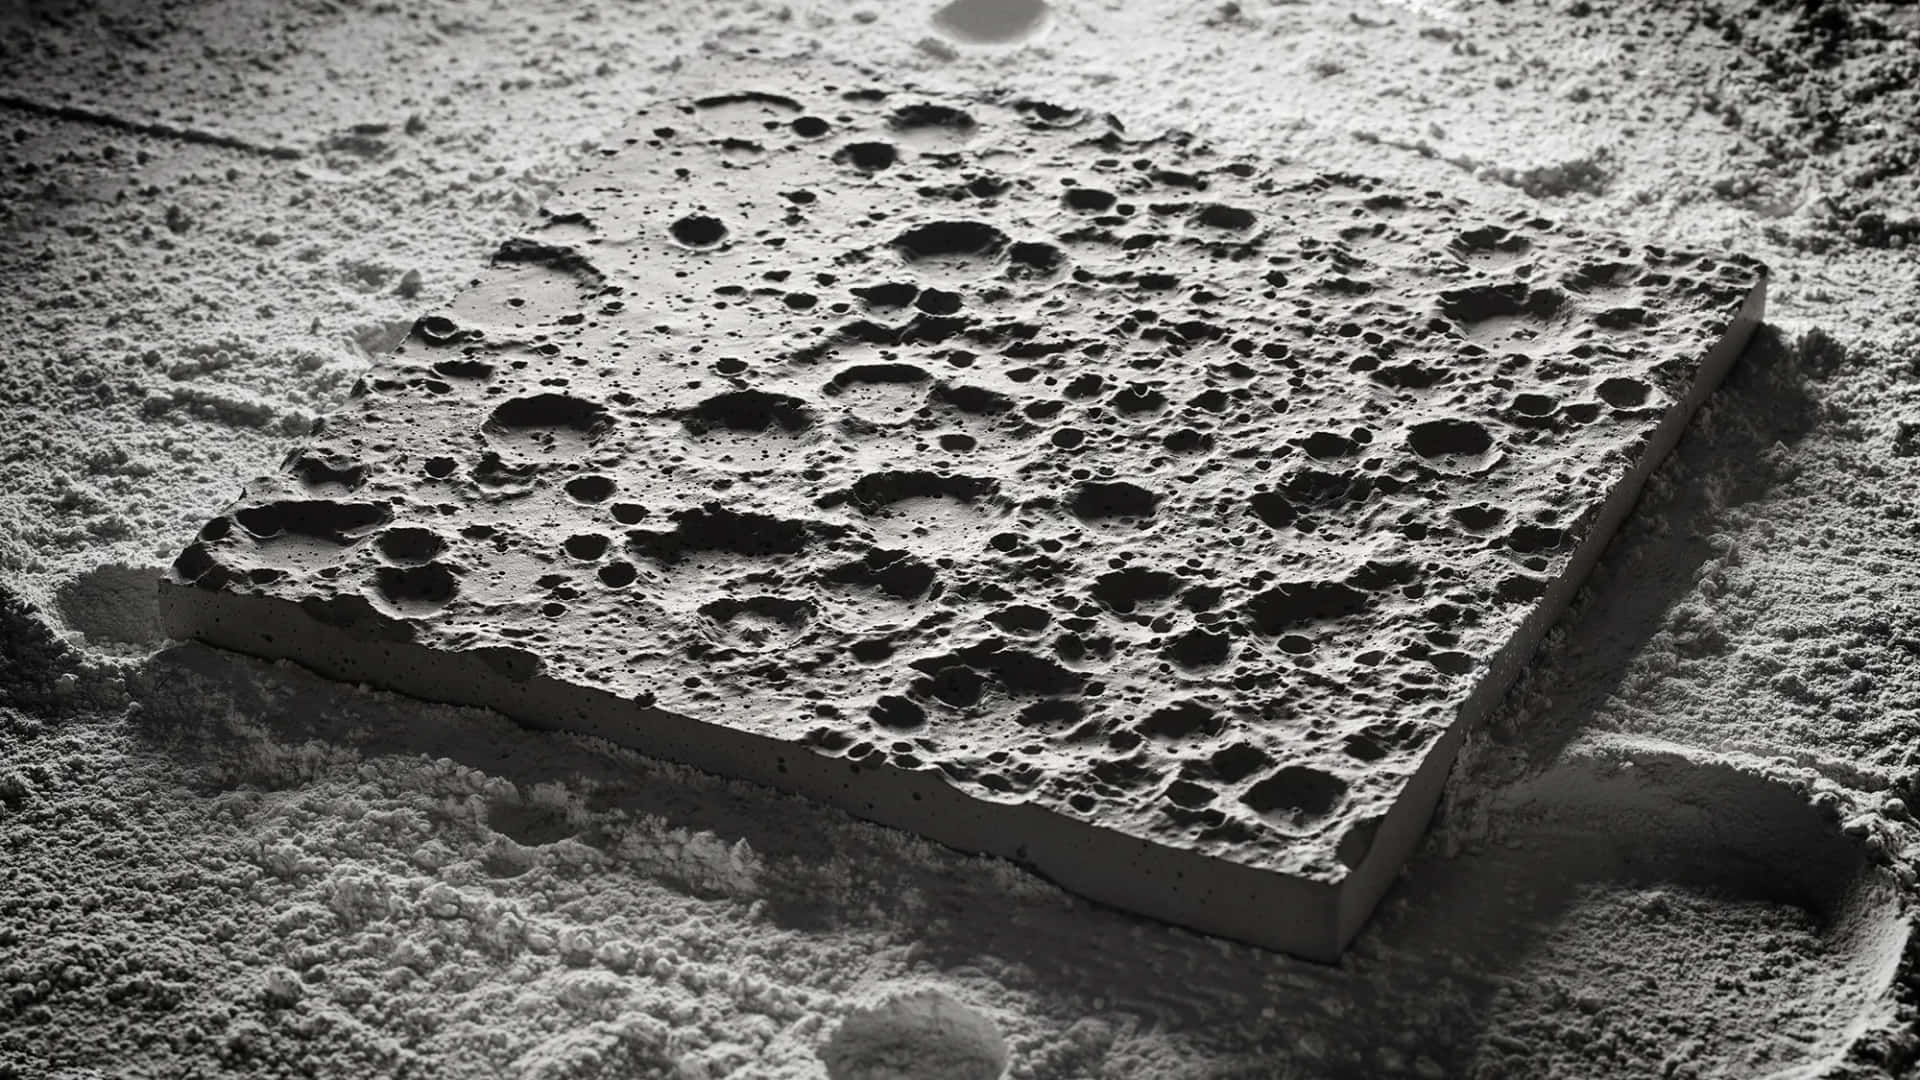 Imagende Modelo De Concreto De La Superficie Lunar.